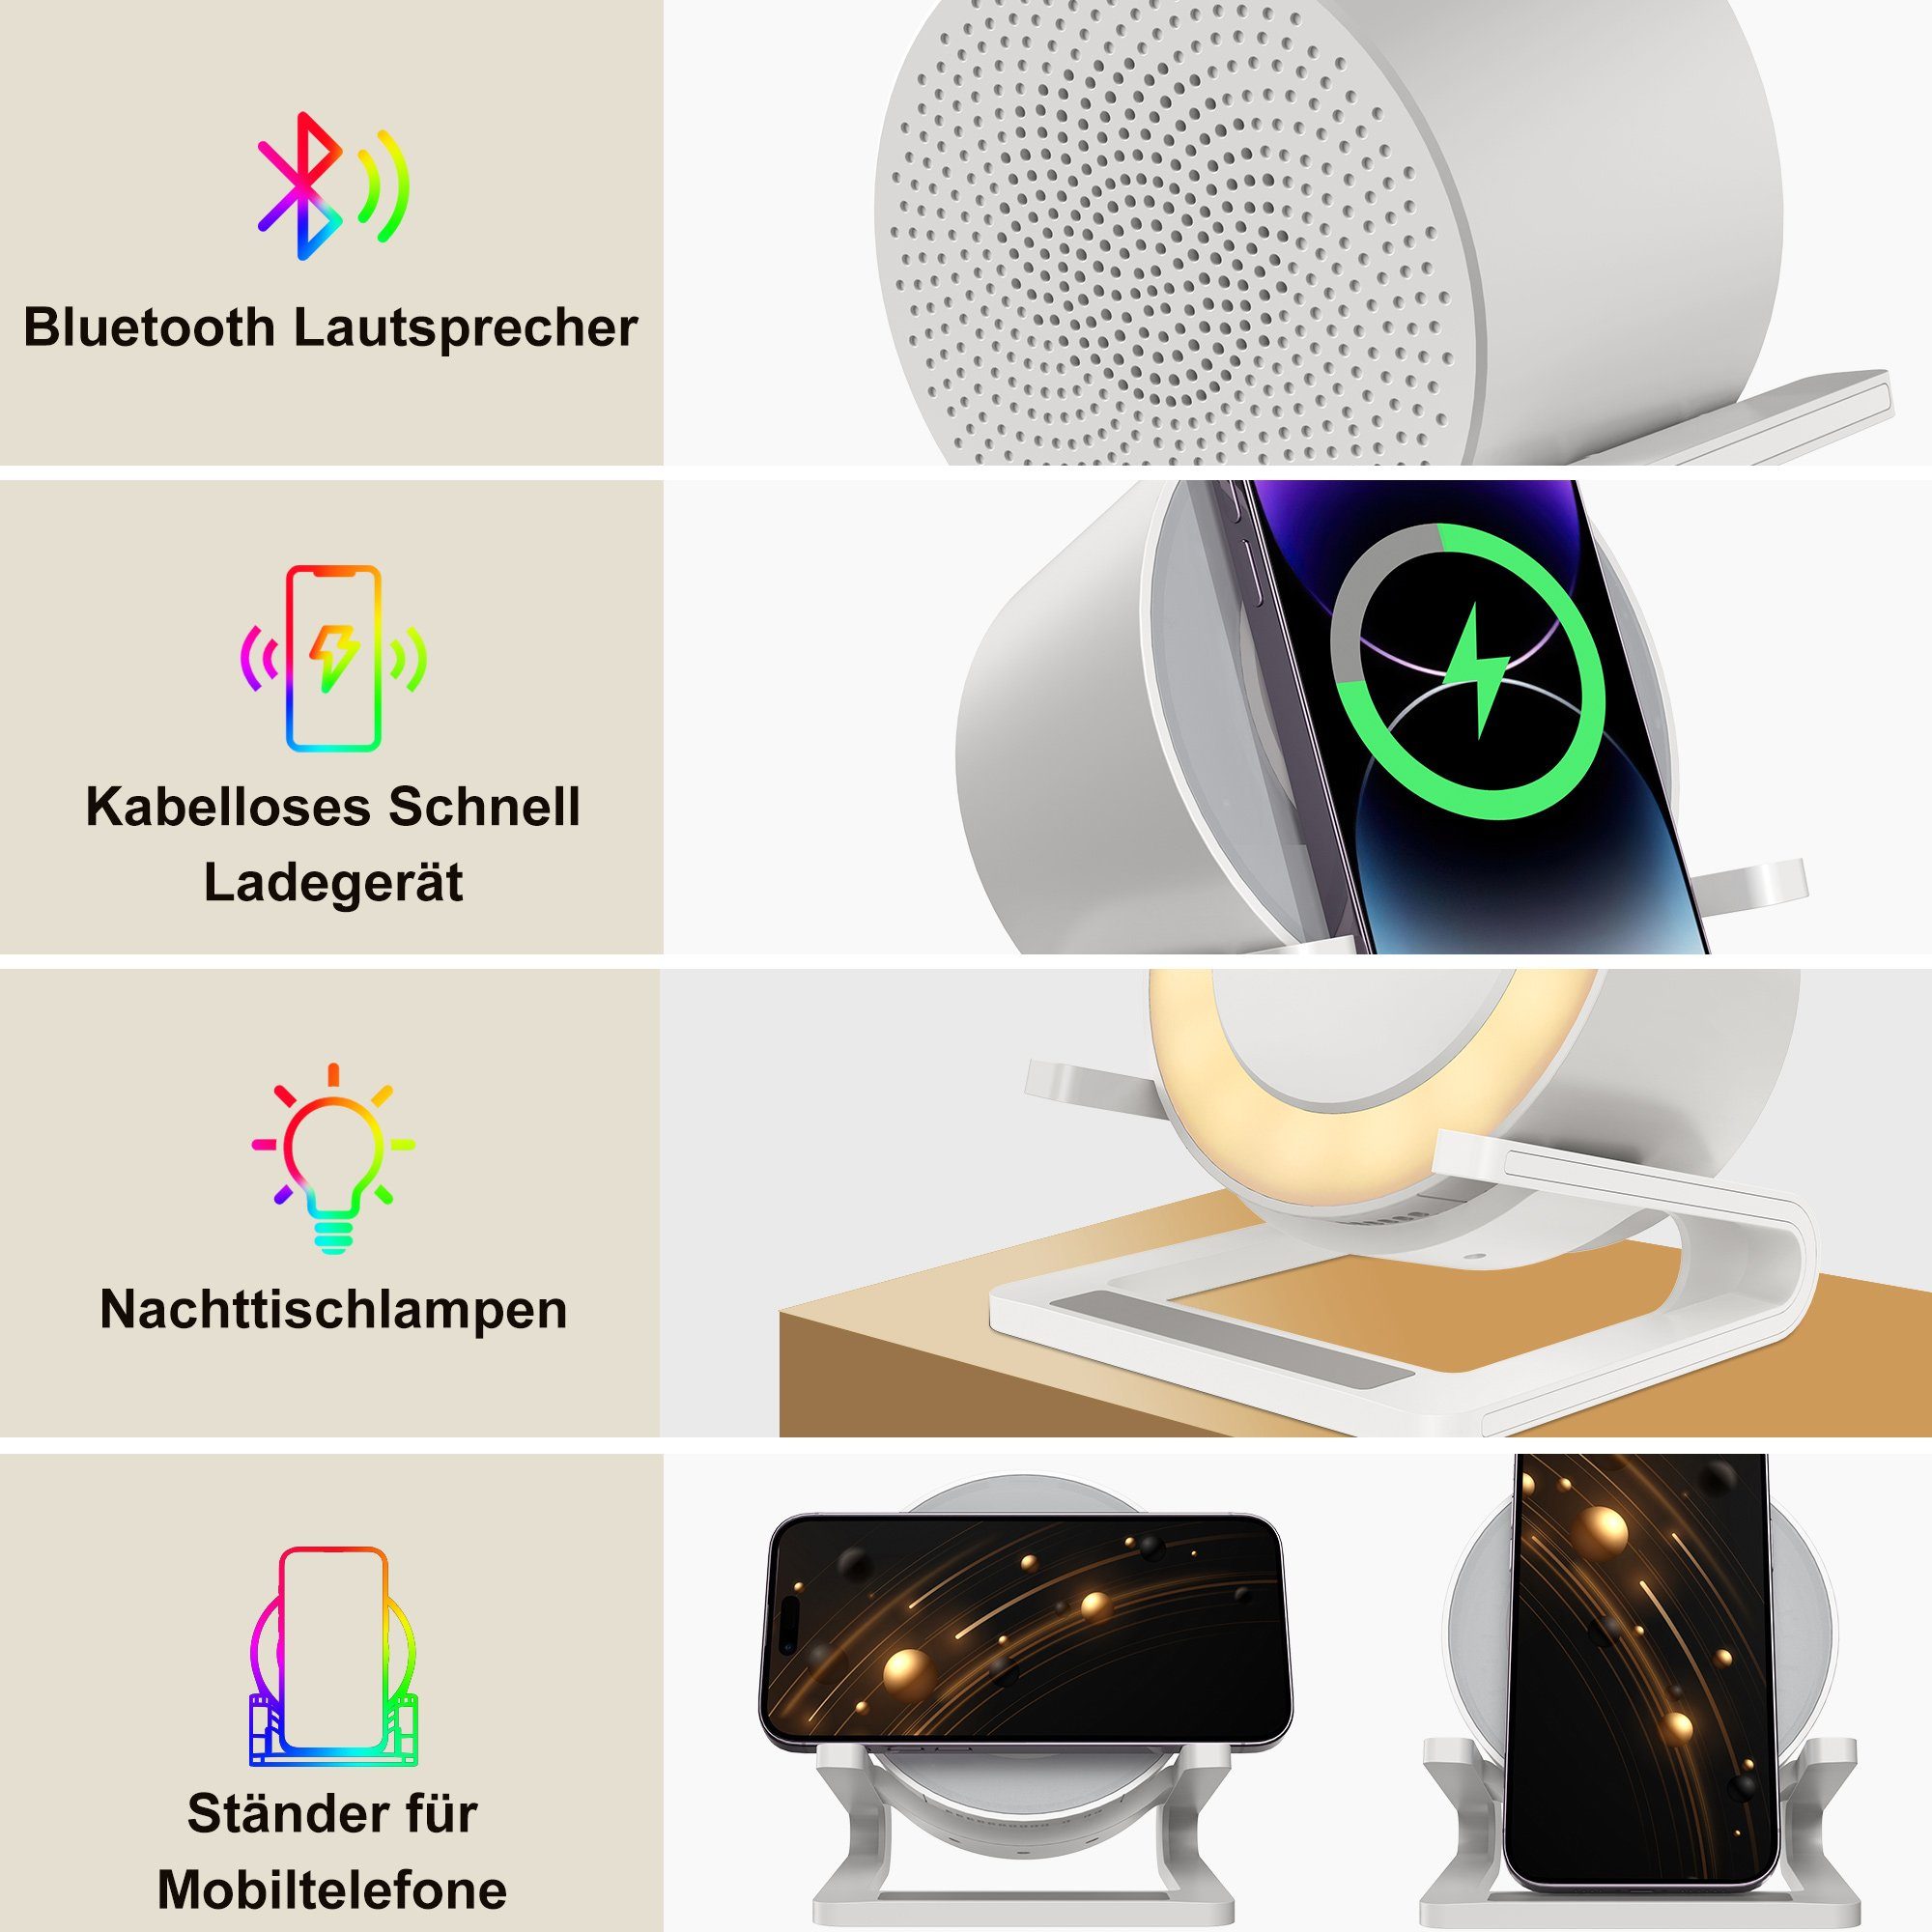 Kabellose Vbrisi Wireless Lautsprecher, Aufladekopf Bluetooth mit Bluetooth-Lautsprecher Ladegeräte